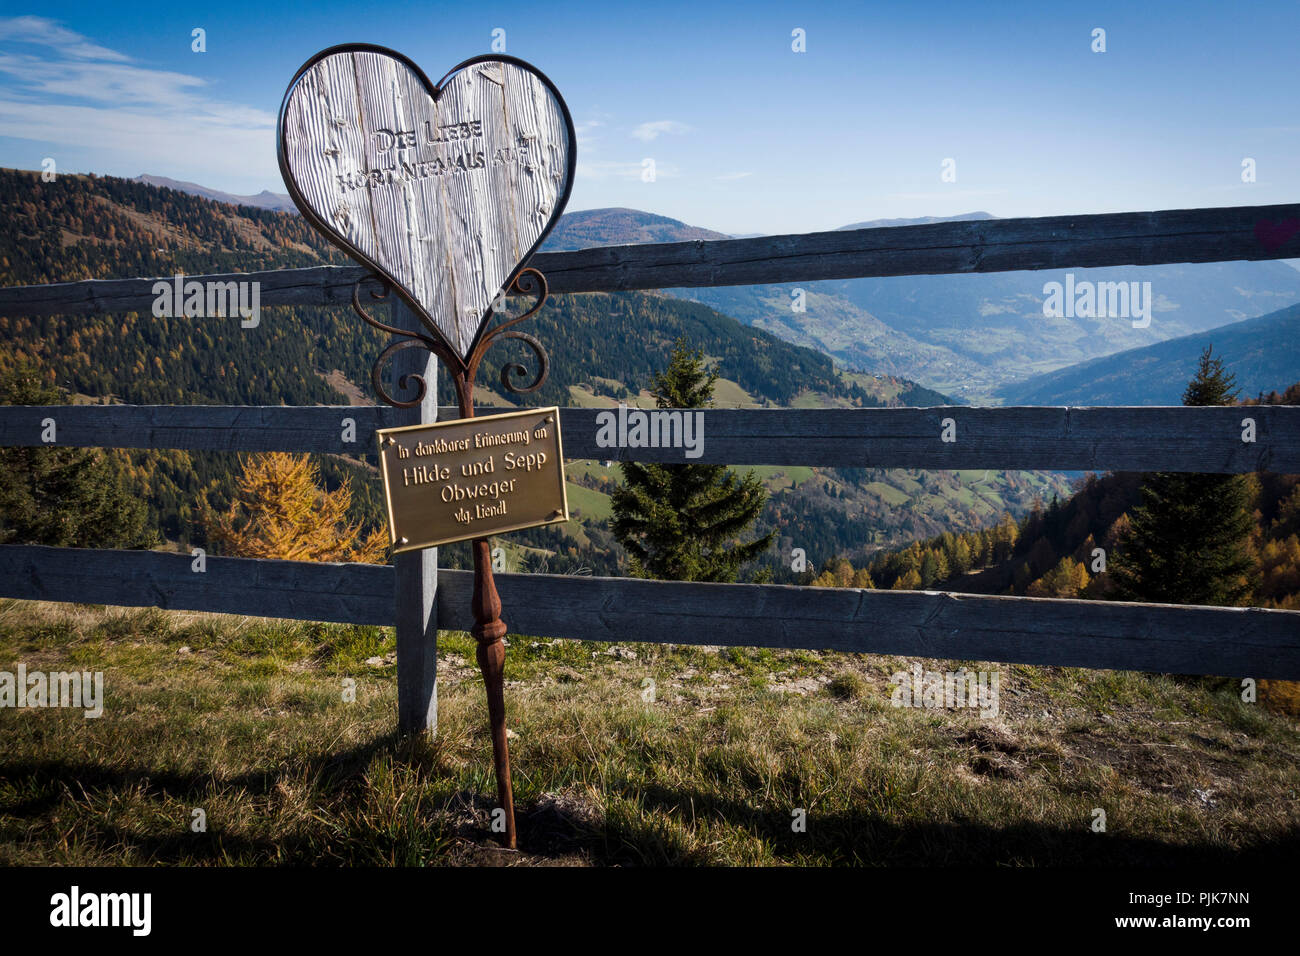 Commemorative plaque on mountain, Carinthia, Austria Stock Photo